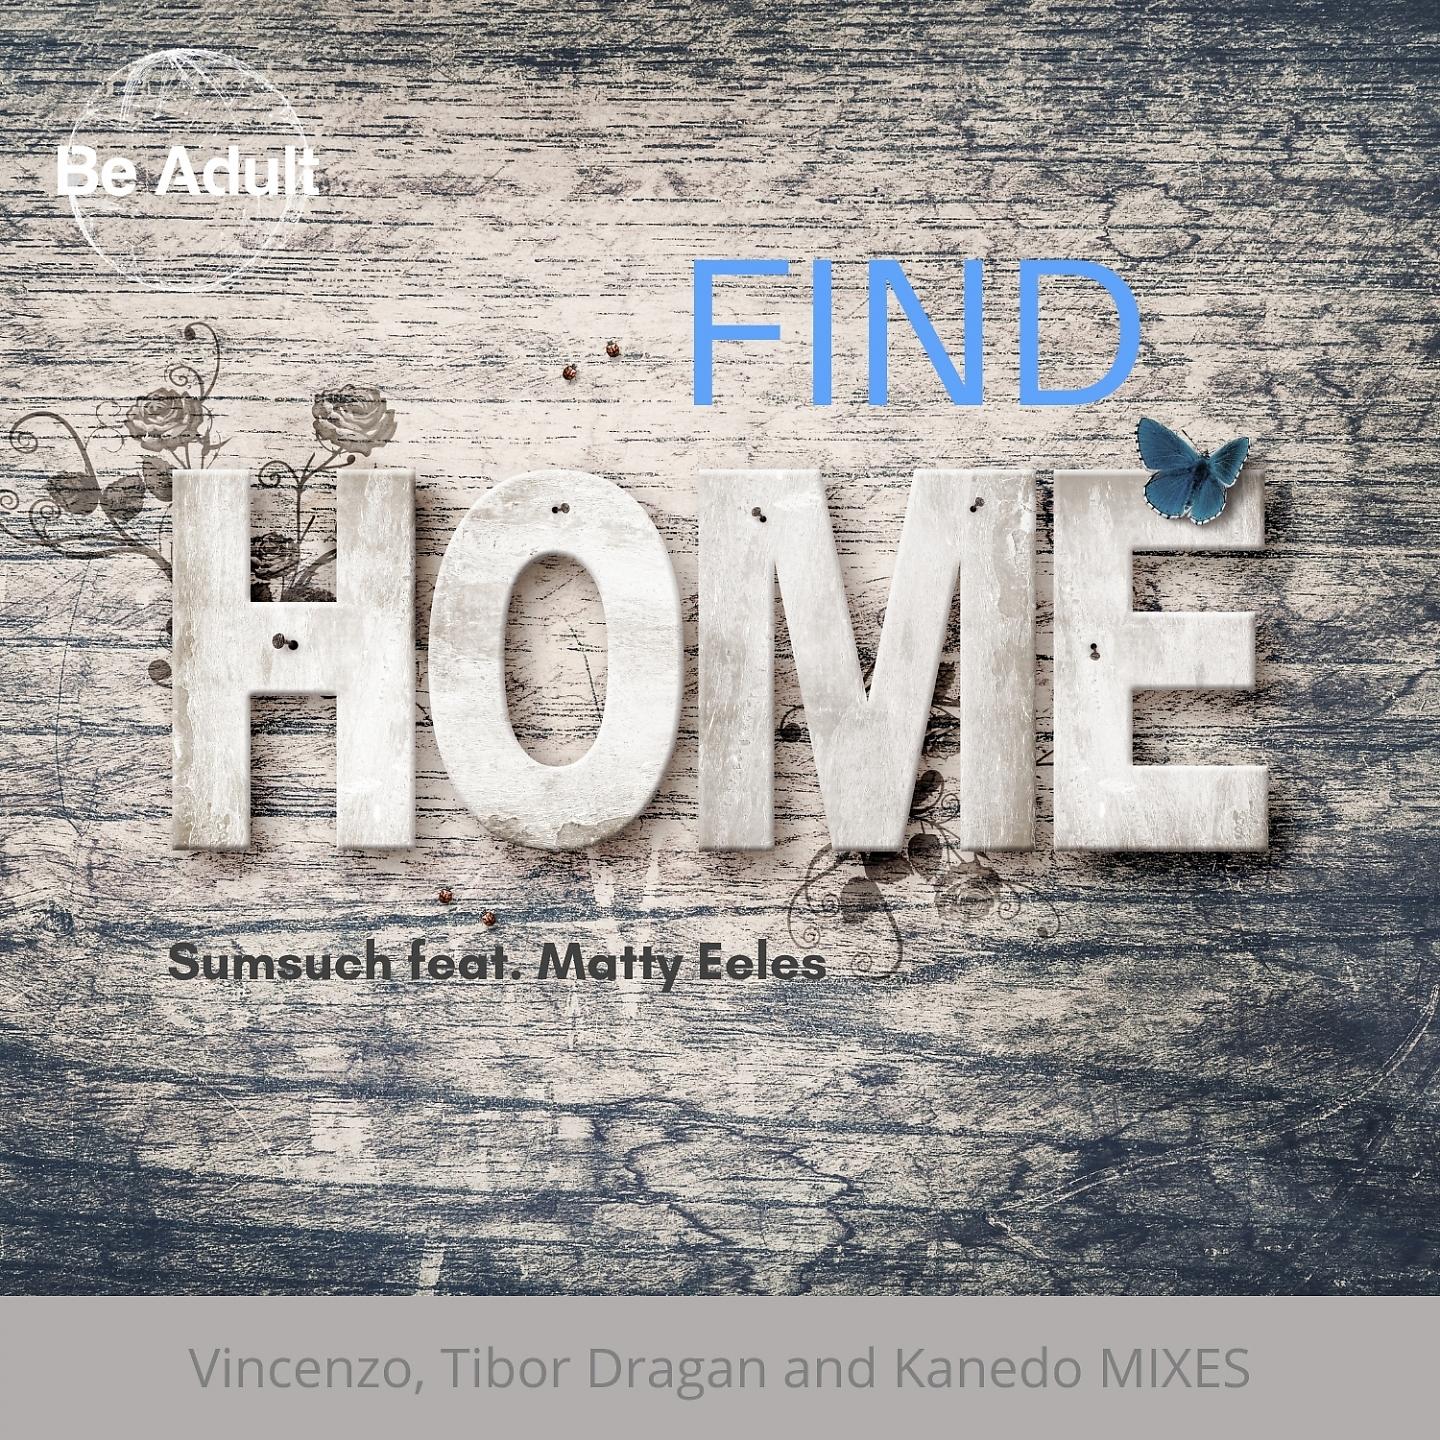 Постер альбома Find Home